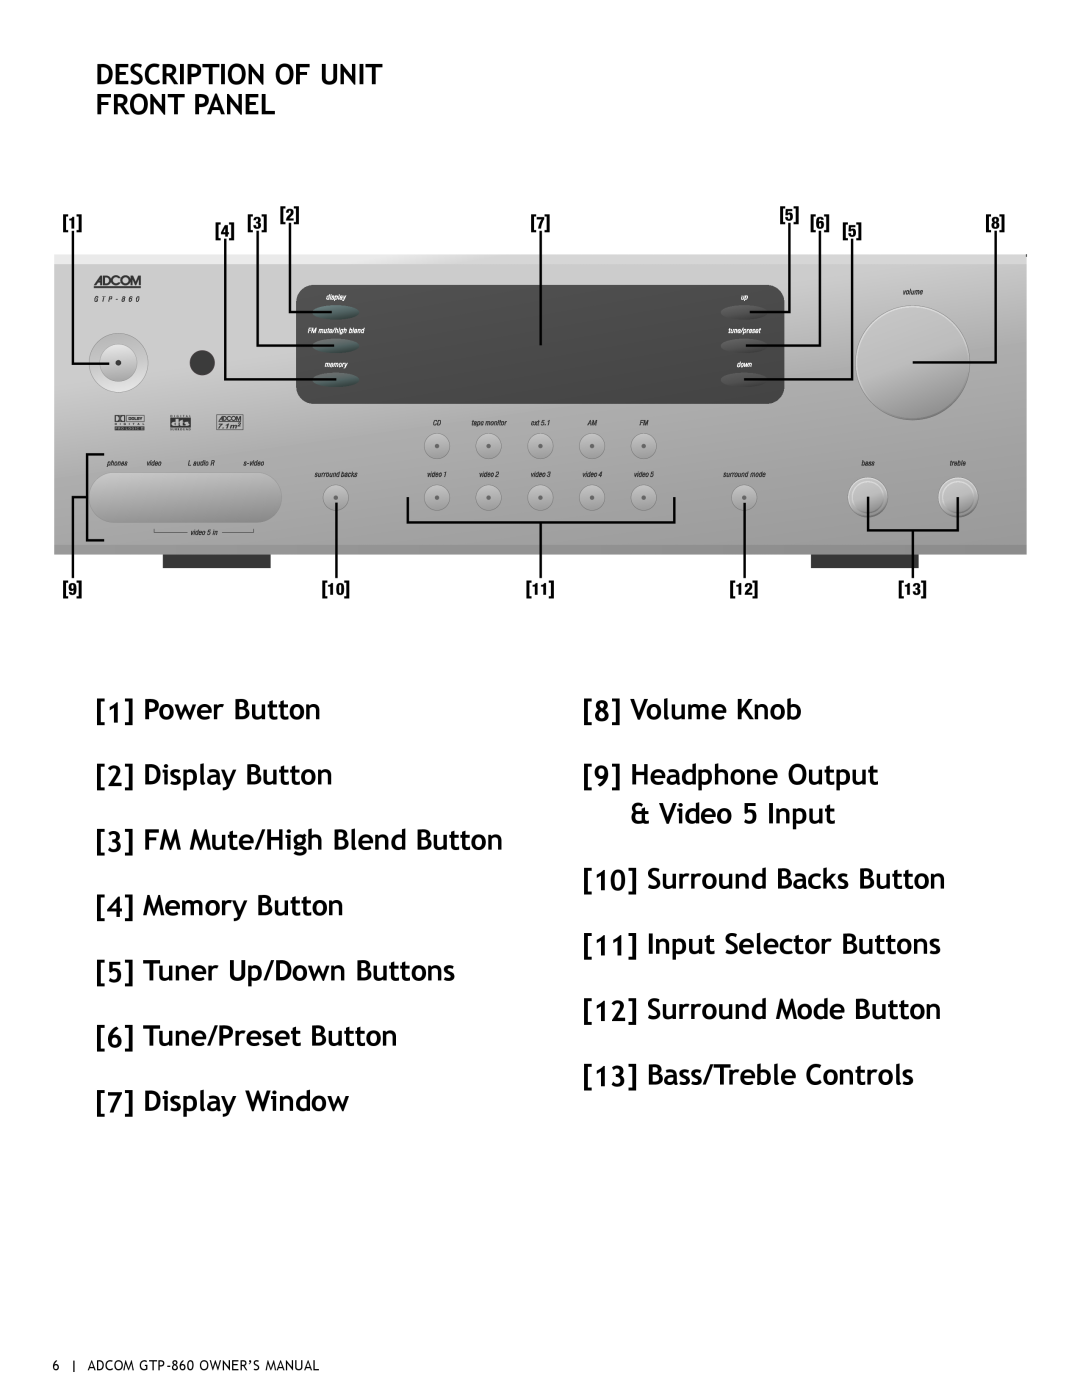 Adcom GTP-860 owner manual Description Of Unit Front Panel 